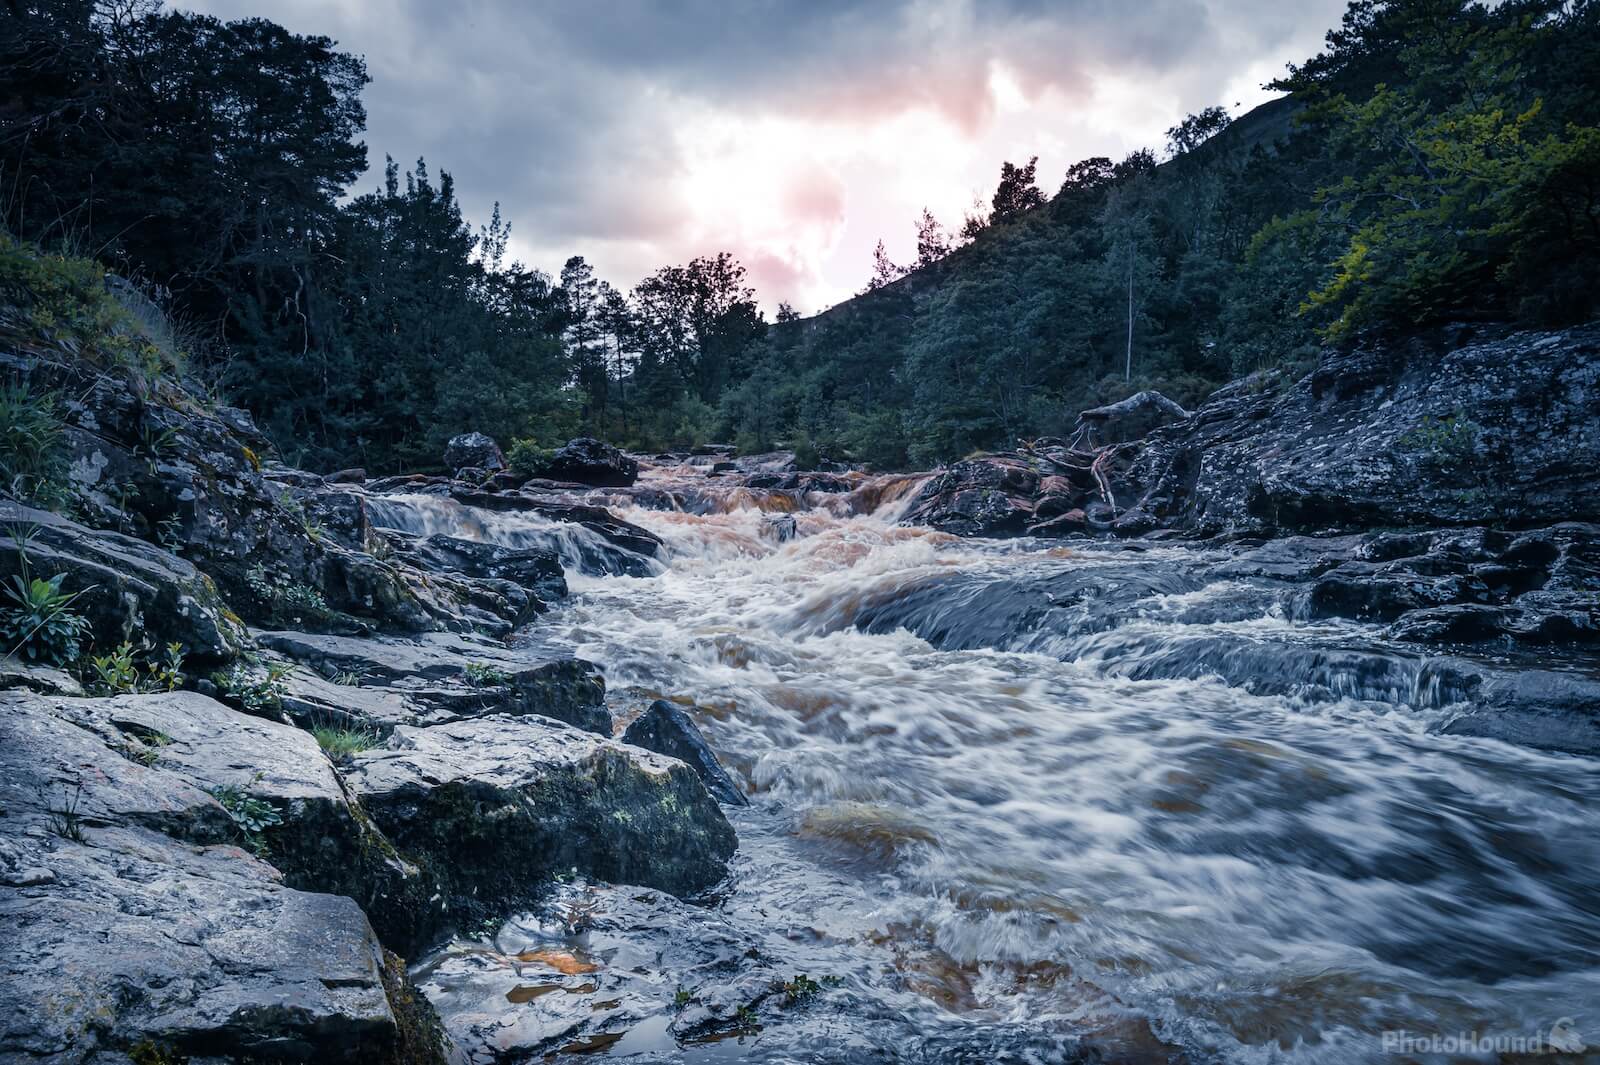 Image of Falls of Dochart, Killin, Scotland by Alan Crozier